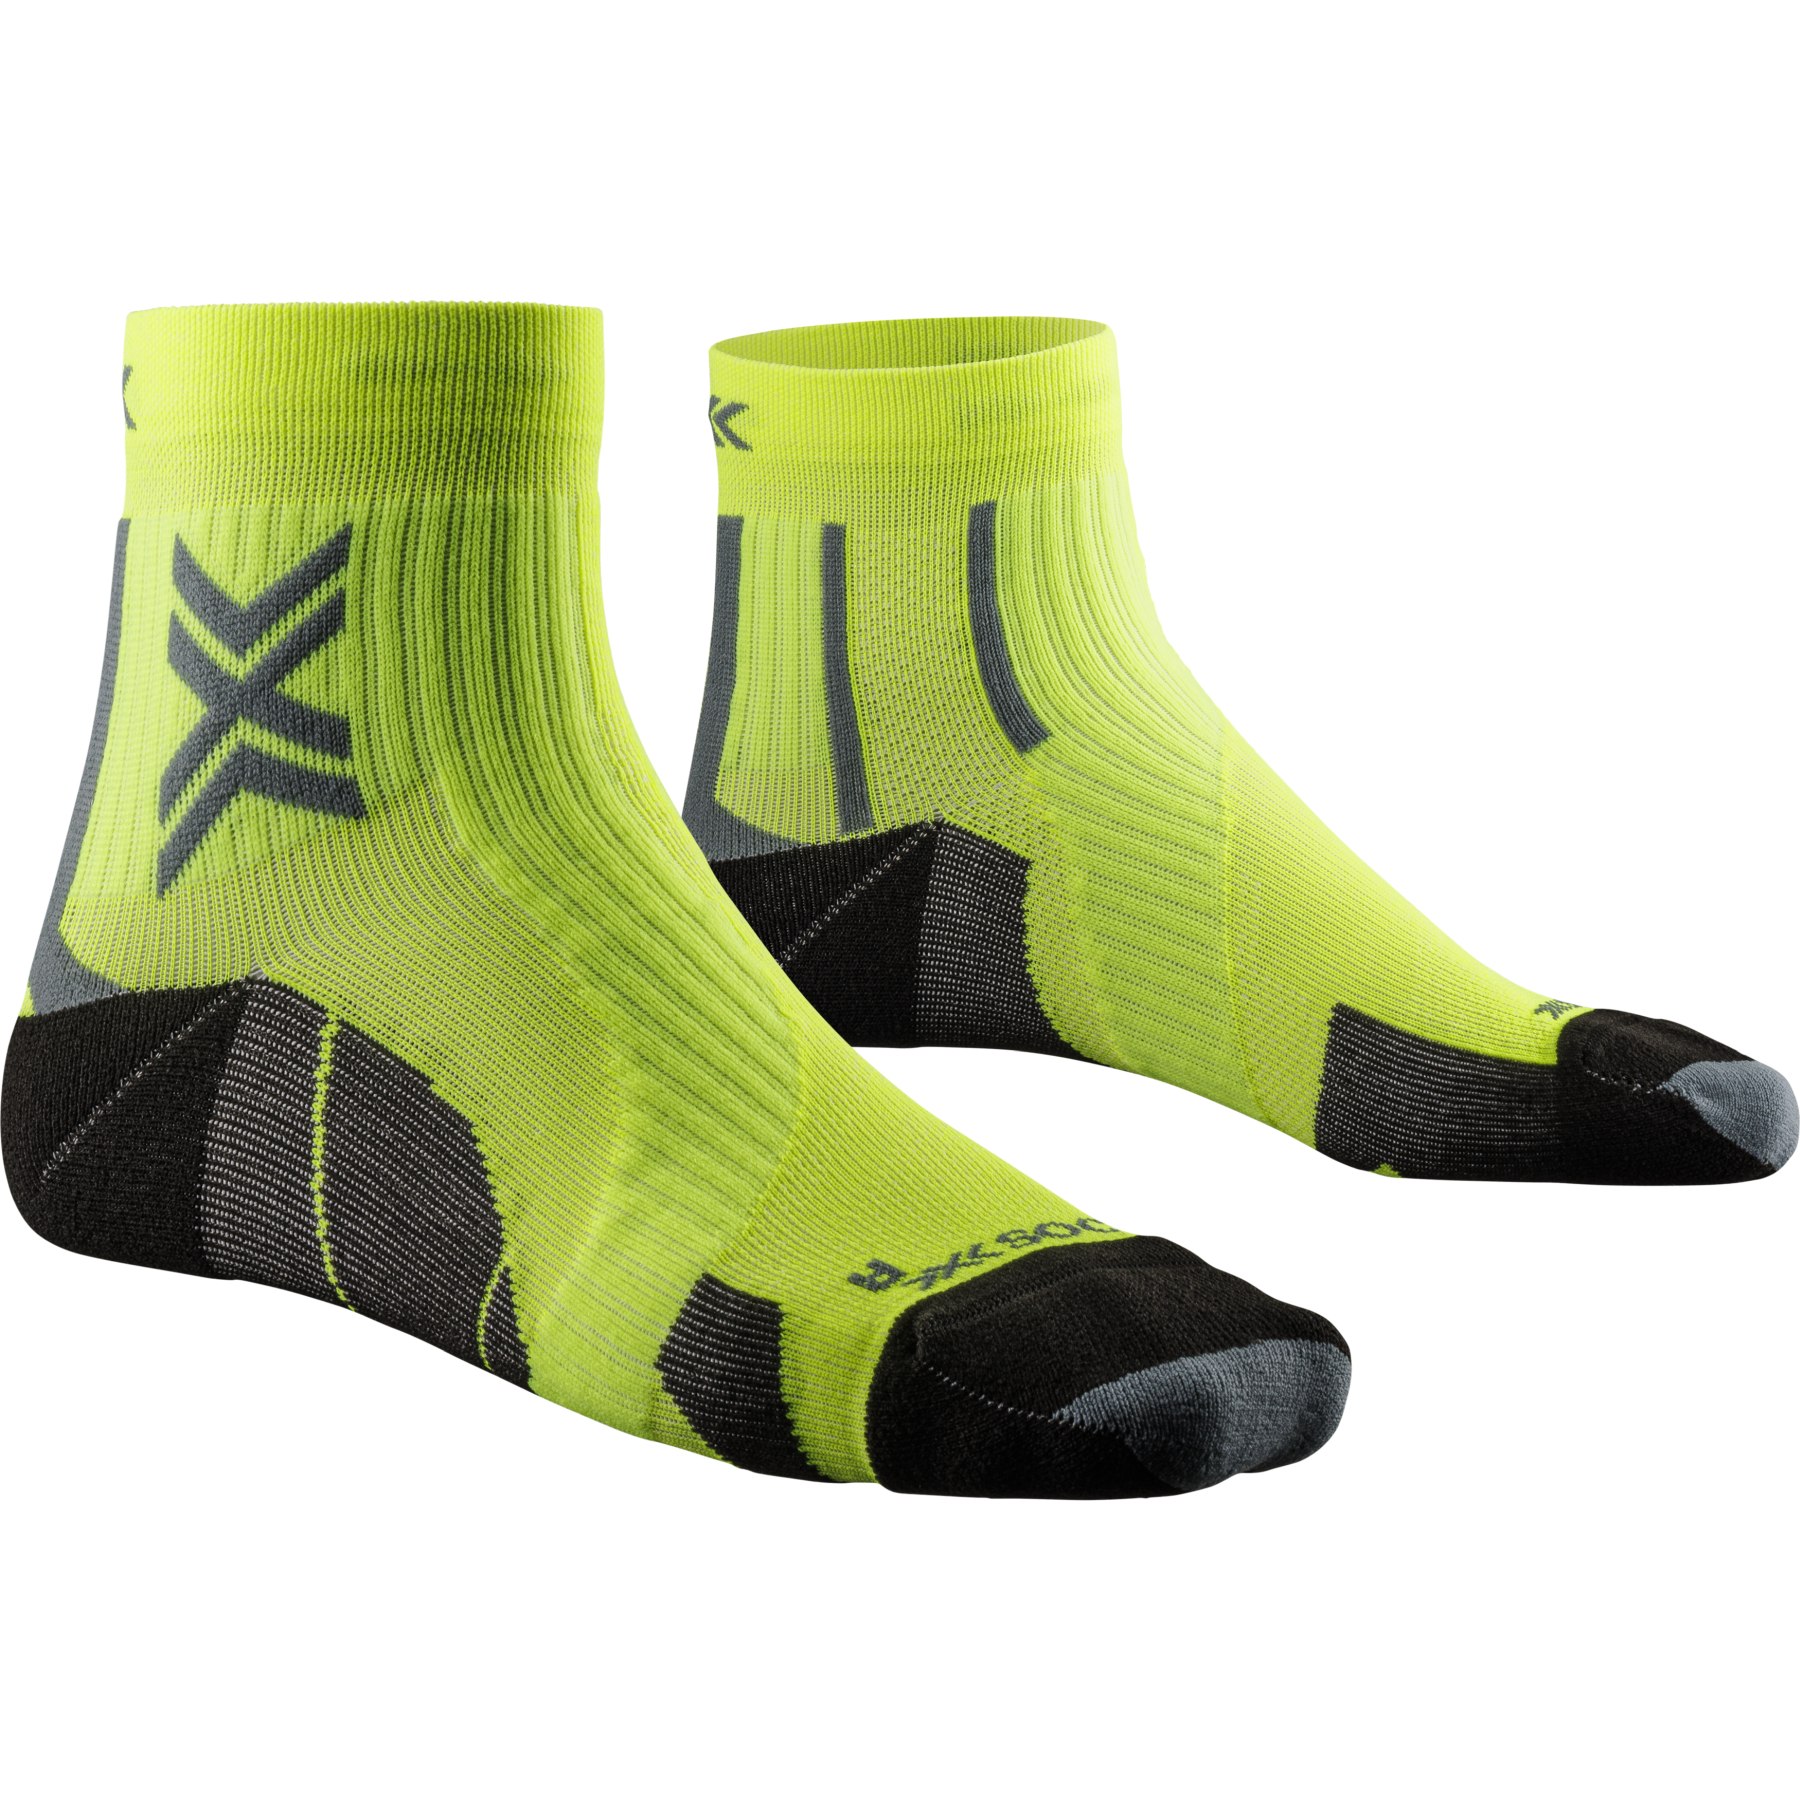 Bild von X-Socks Run Perform Ankle Socken - fluo yellow/opal black